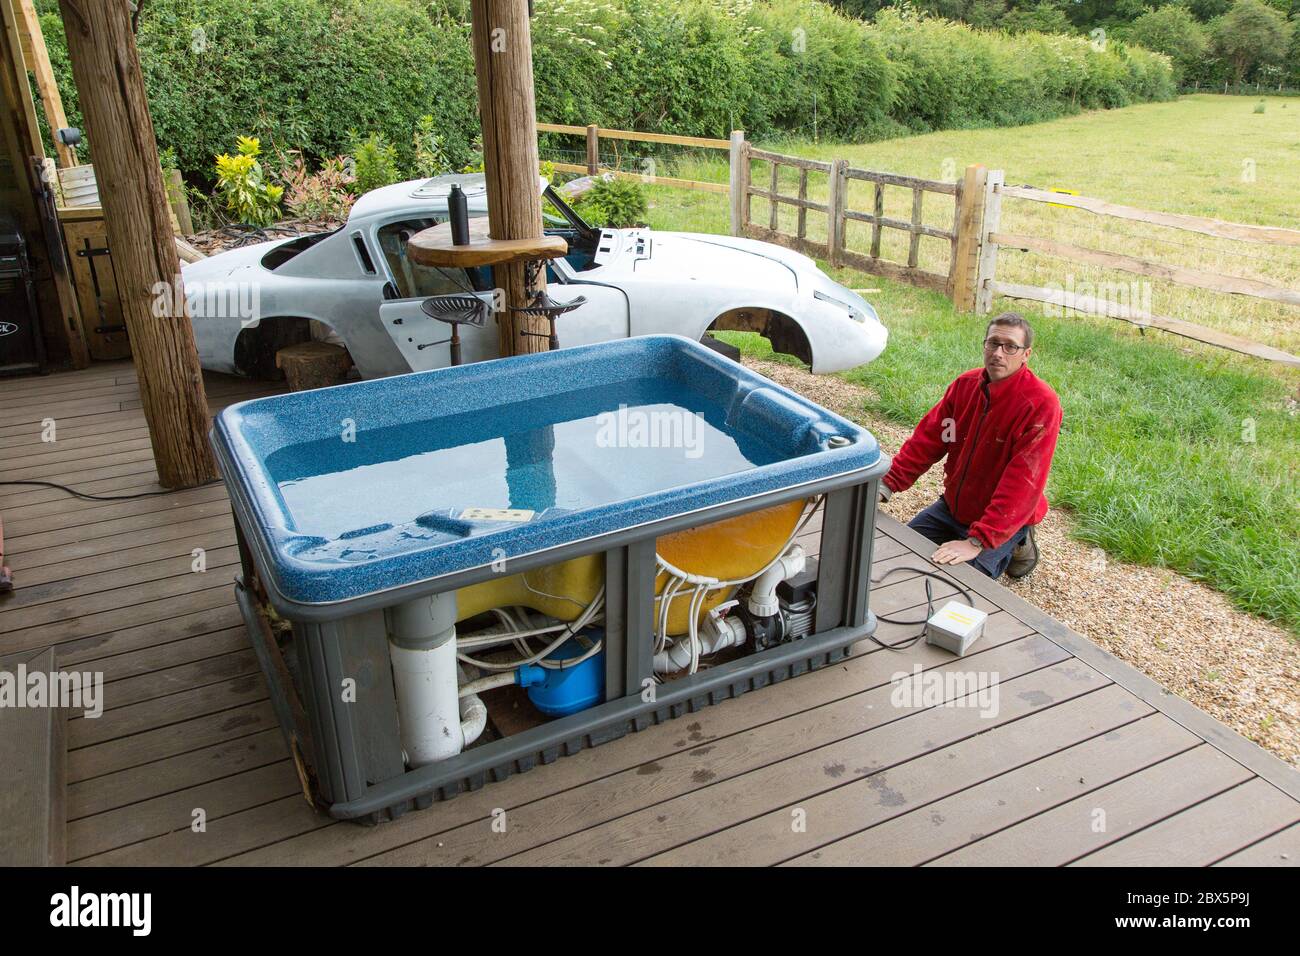 Lotus Elan +2 classic car being converted into a custom hot tub, Medstead, Alton, Hampshire England, United Kingdom. Stock Photo